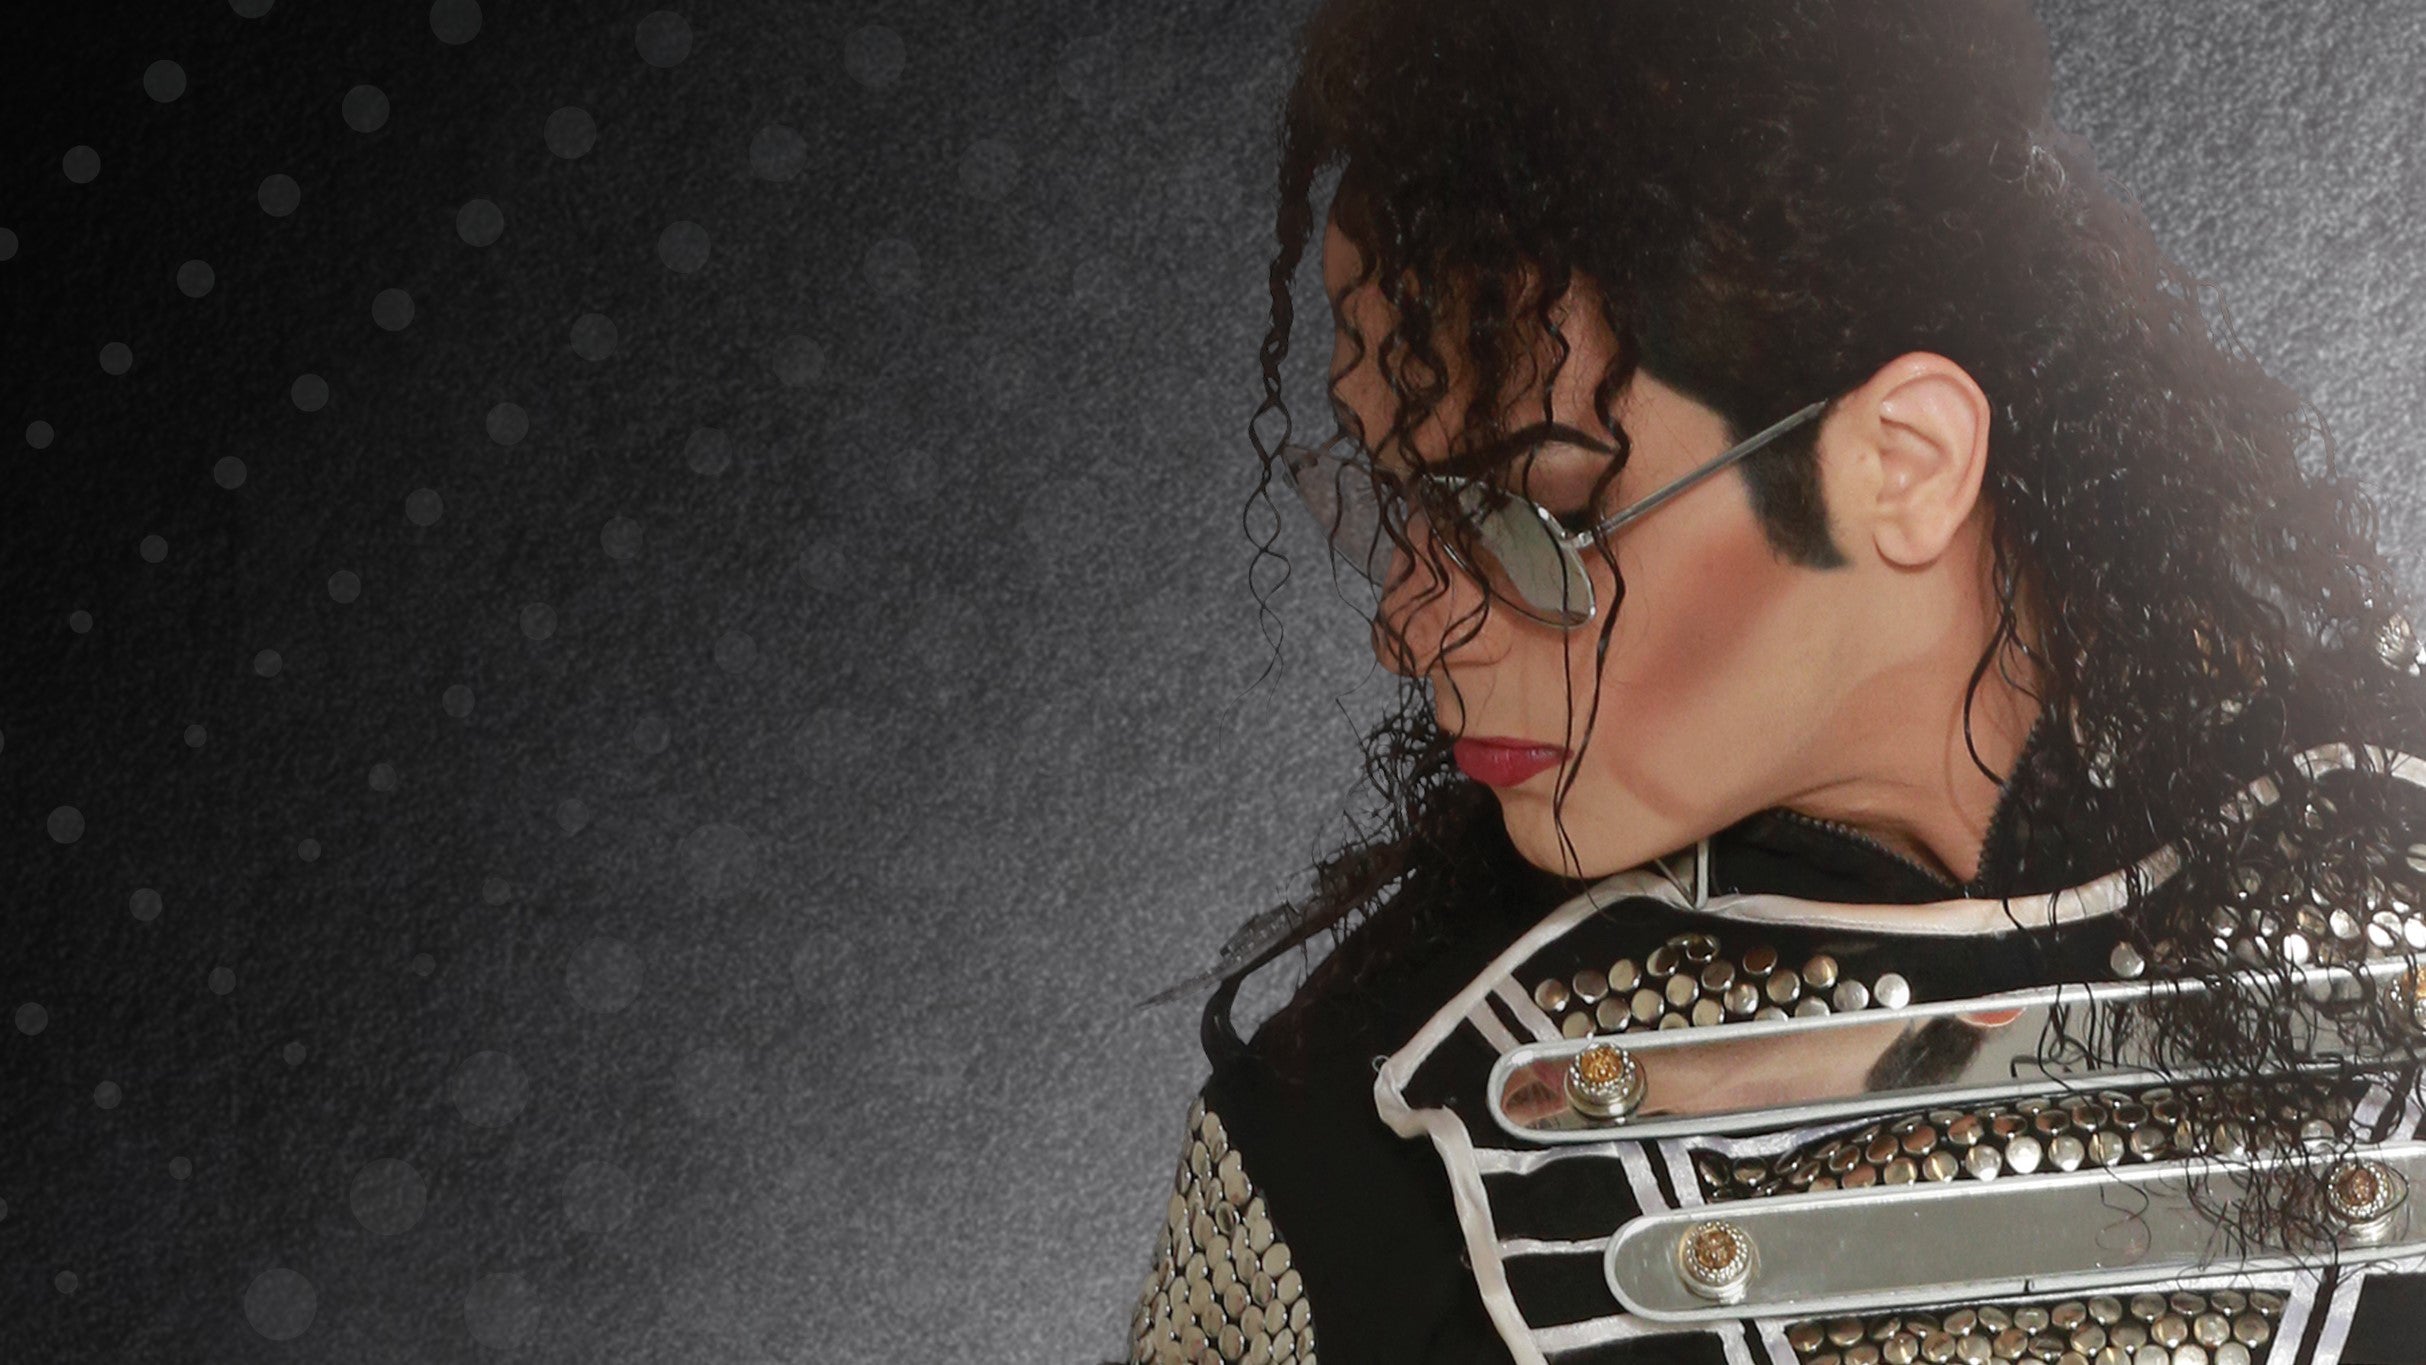 MJ LIVE - Michael Jackson Tribute in Rosemont promo photo for Black Friday Promotion presale offer code